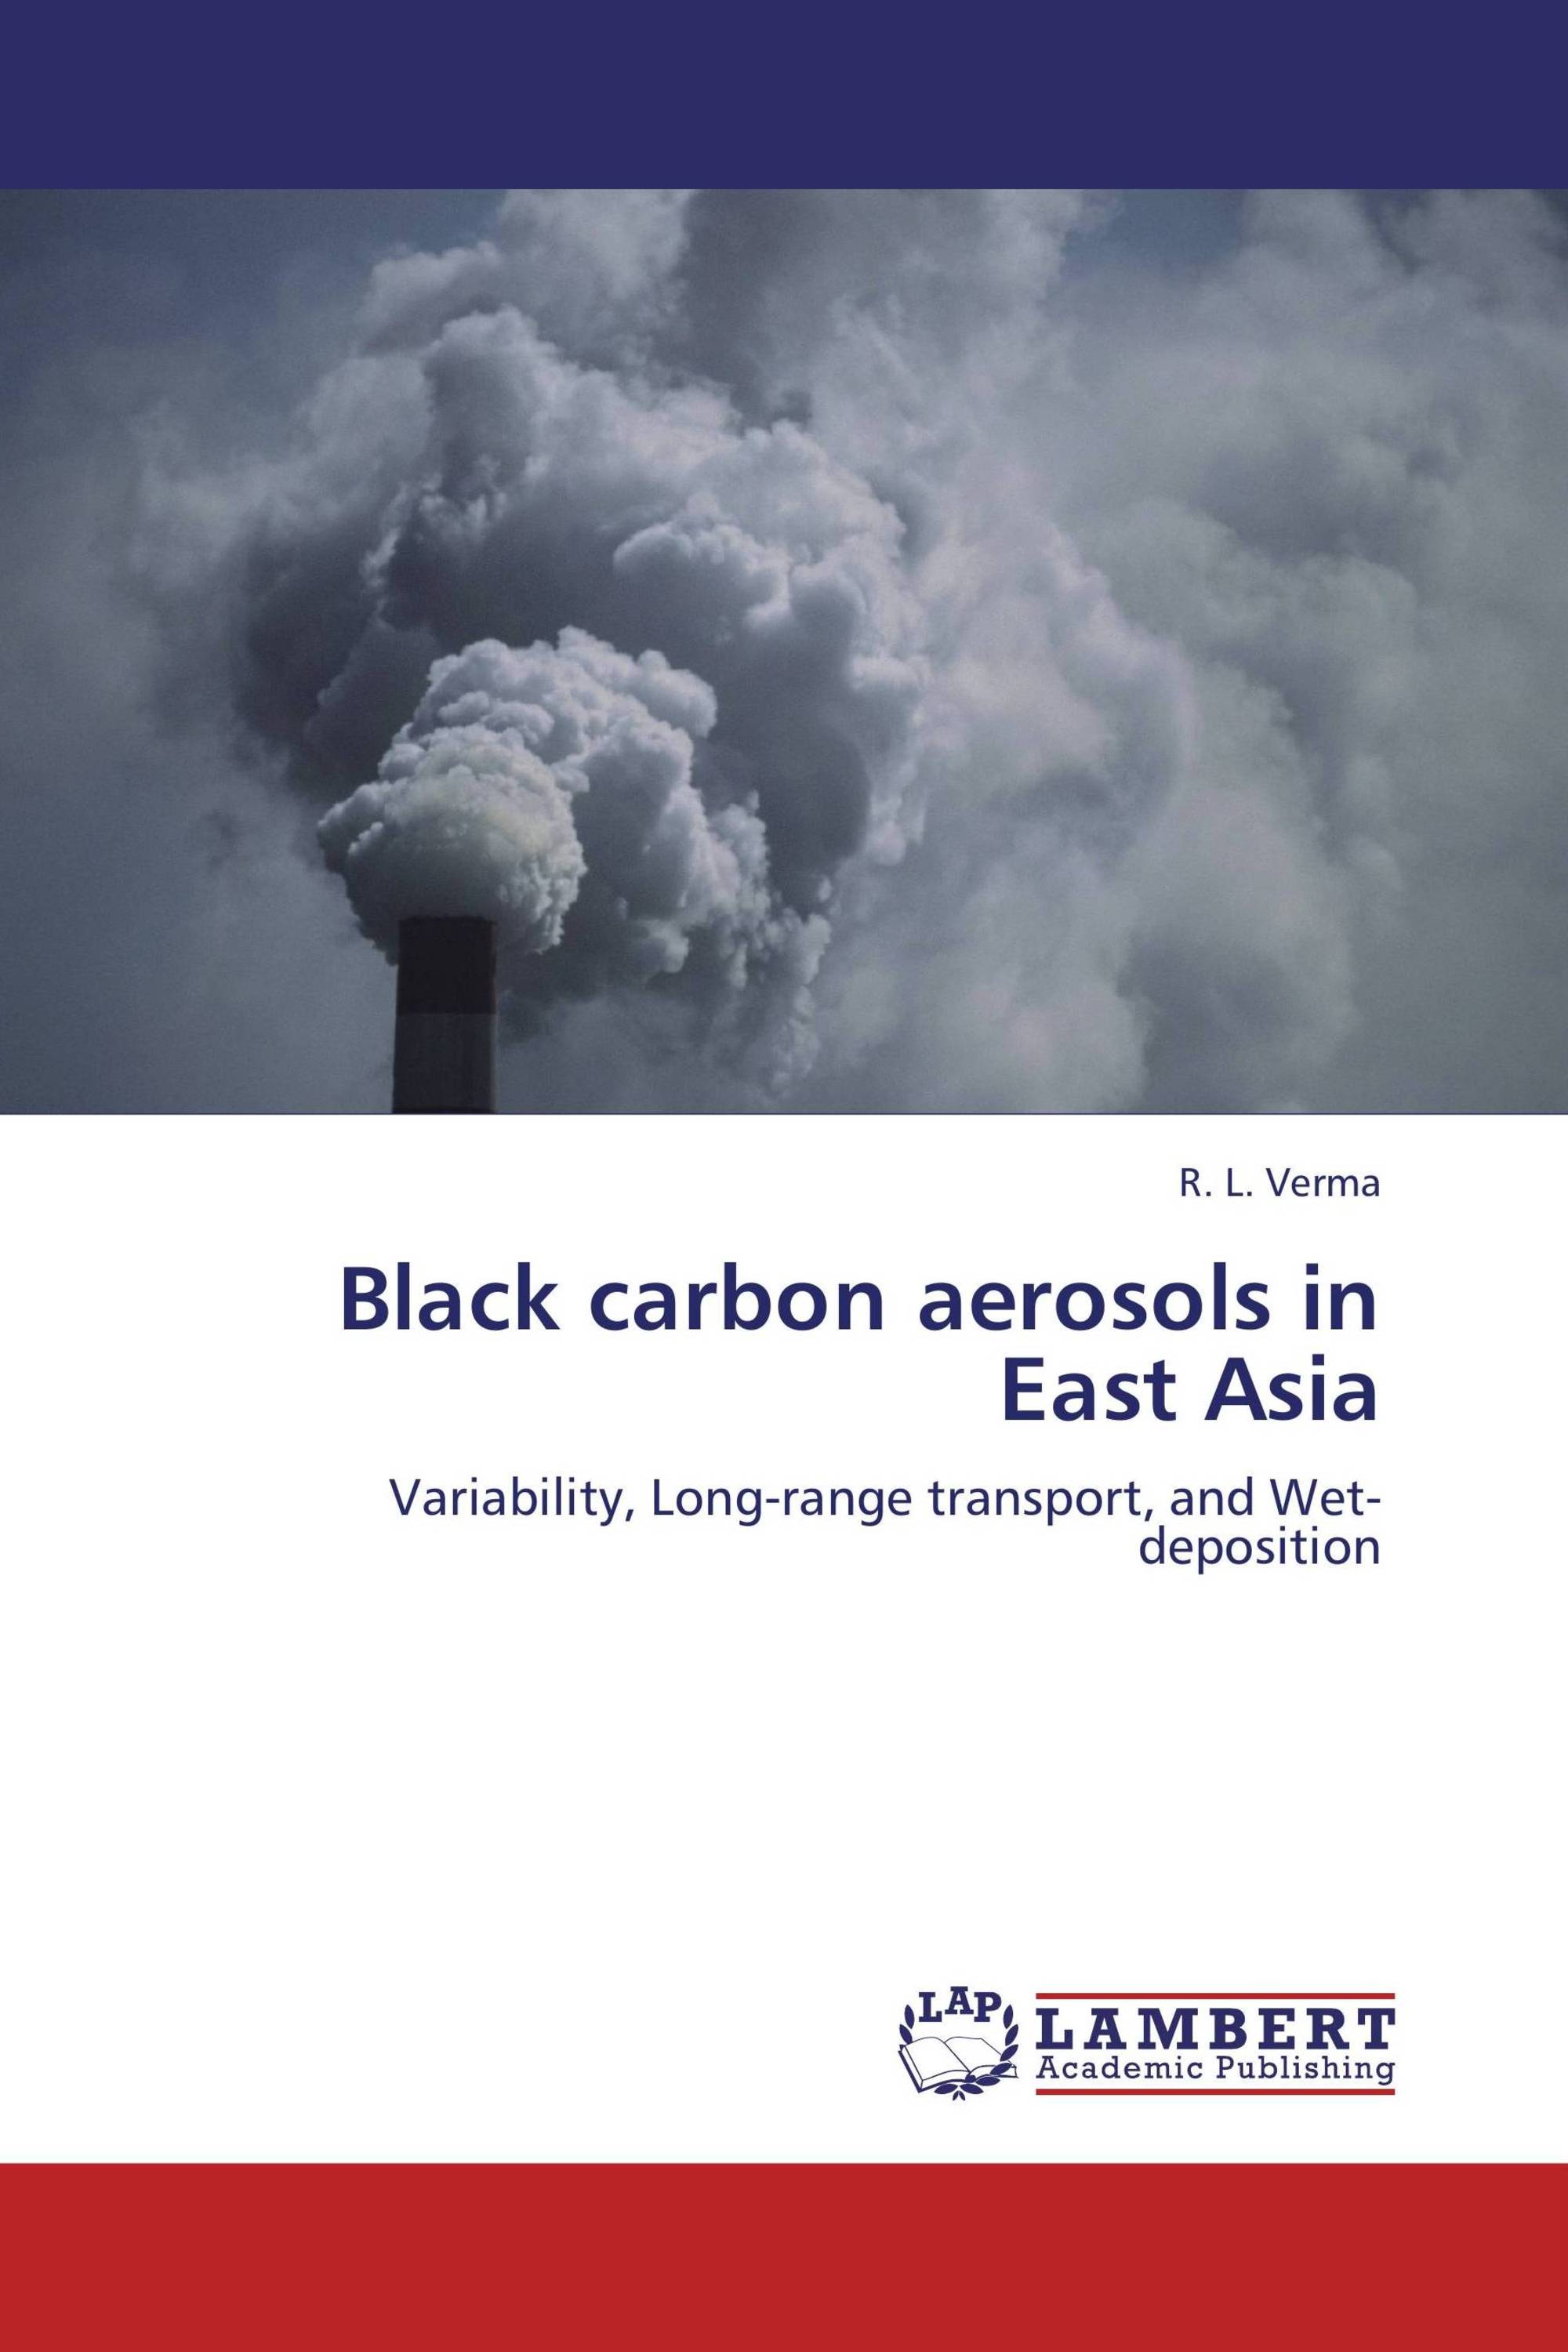 Dissertation on carbon black